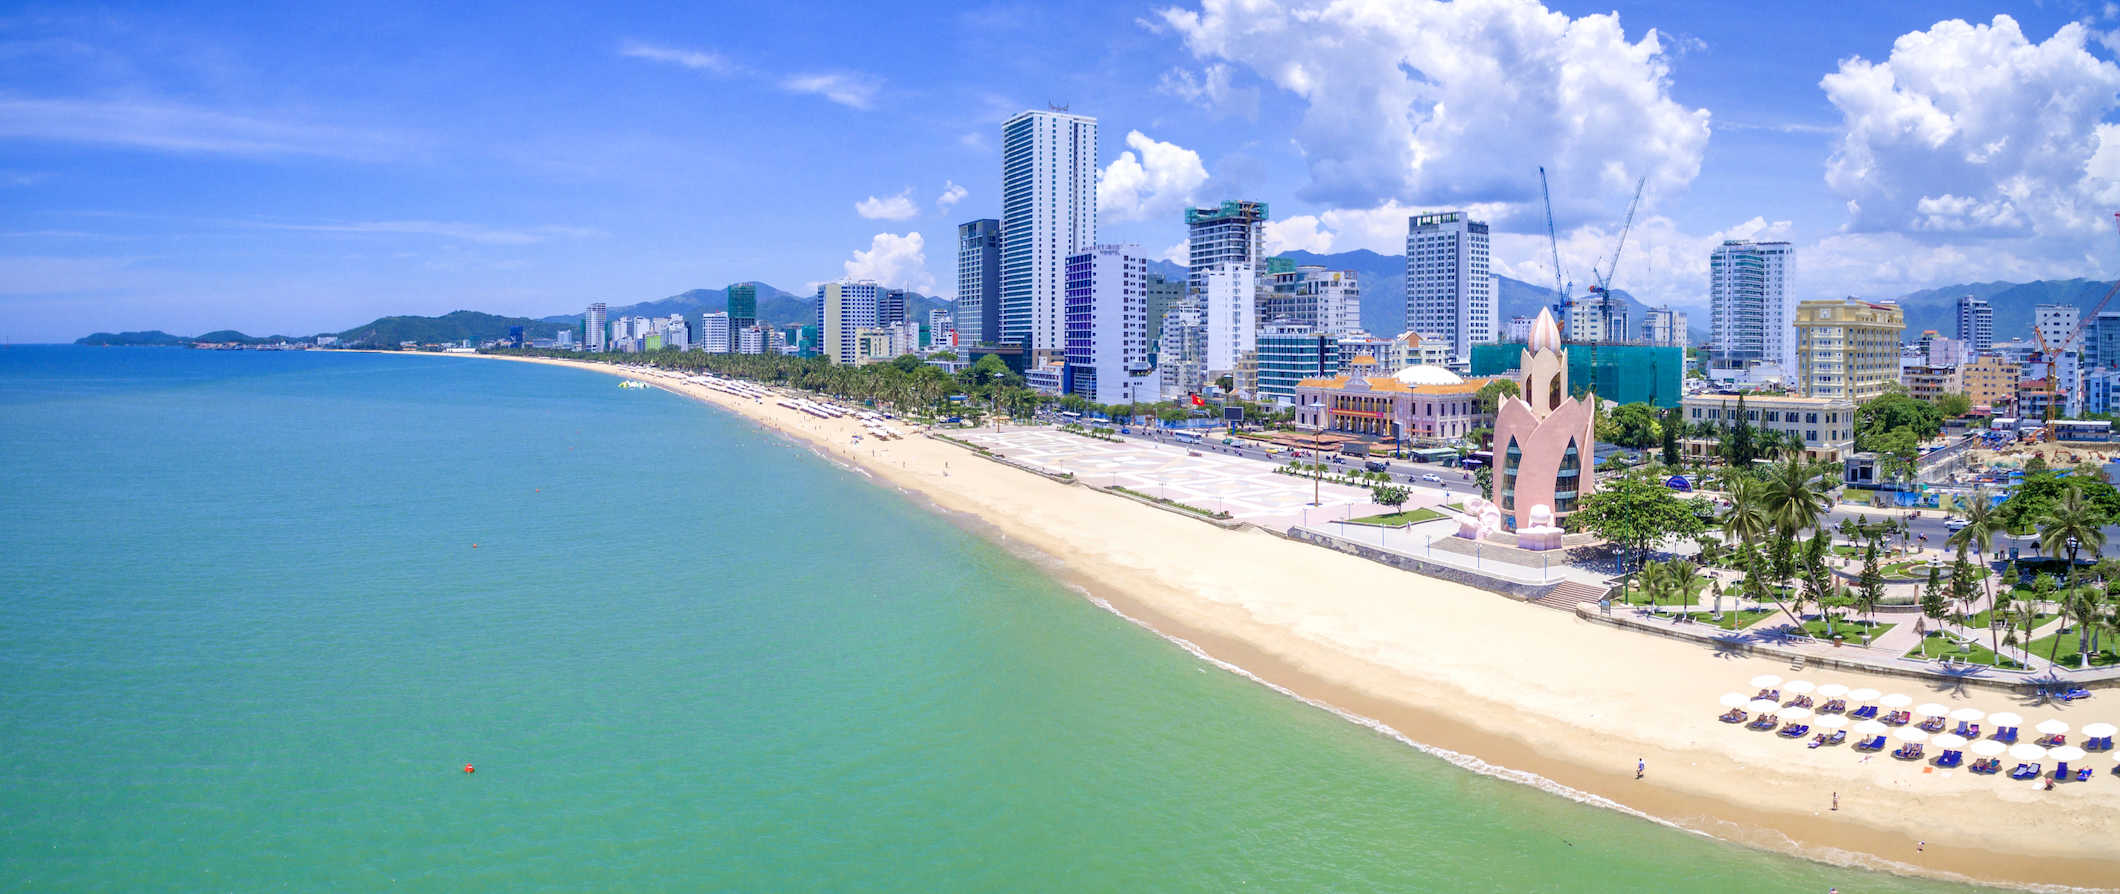 The beach scene along the coast of Nha Trang, Vietnam with the city skyline towering along the coastline